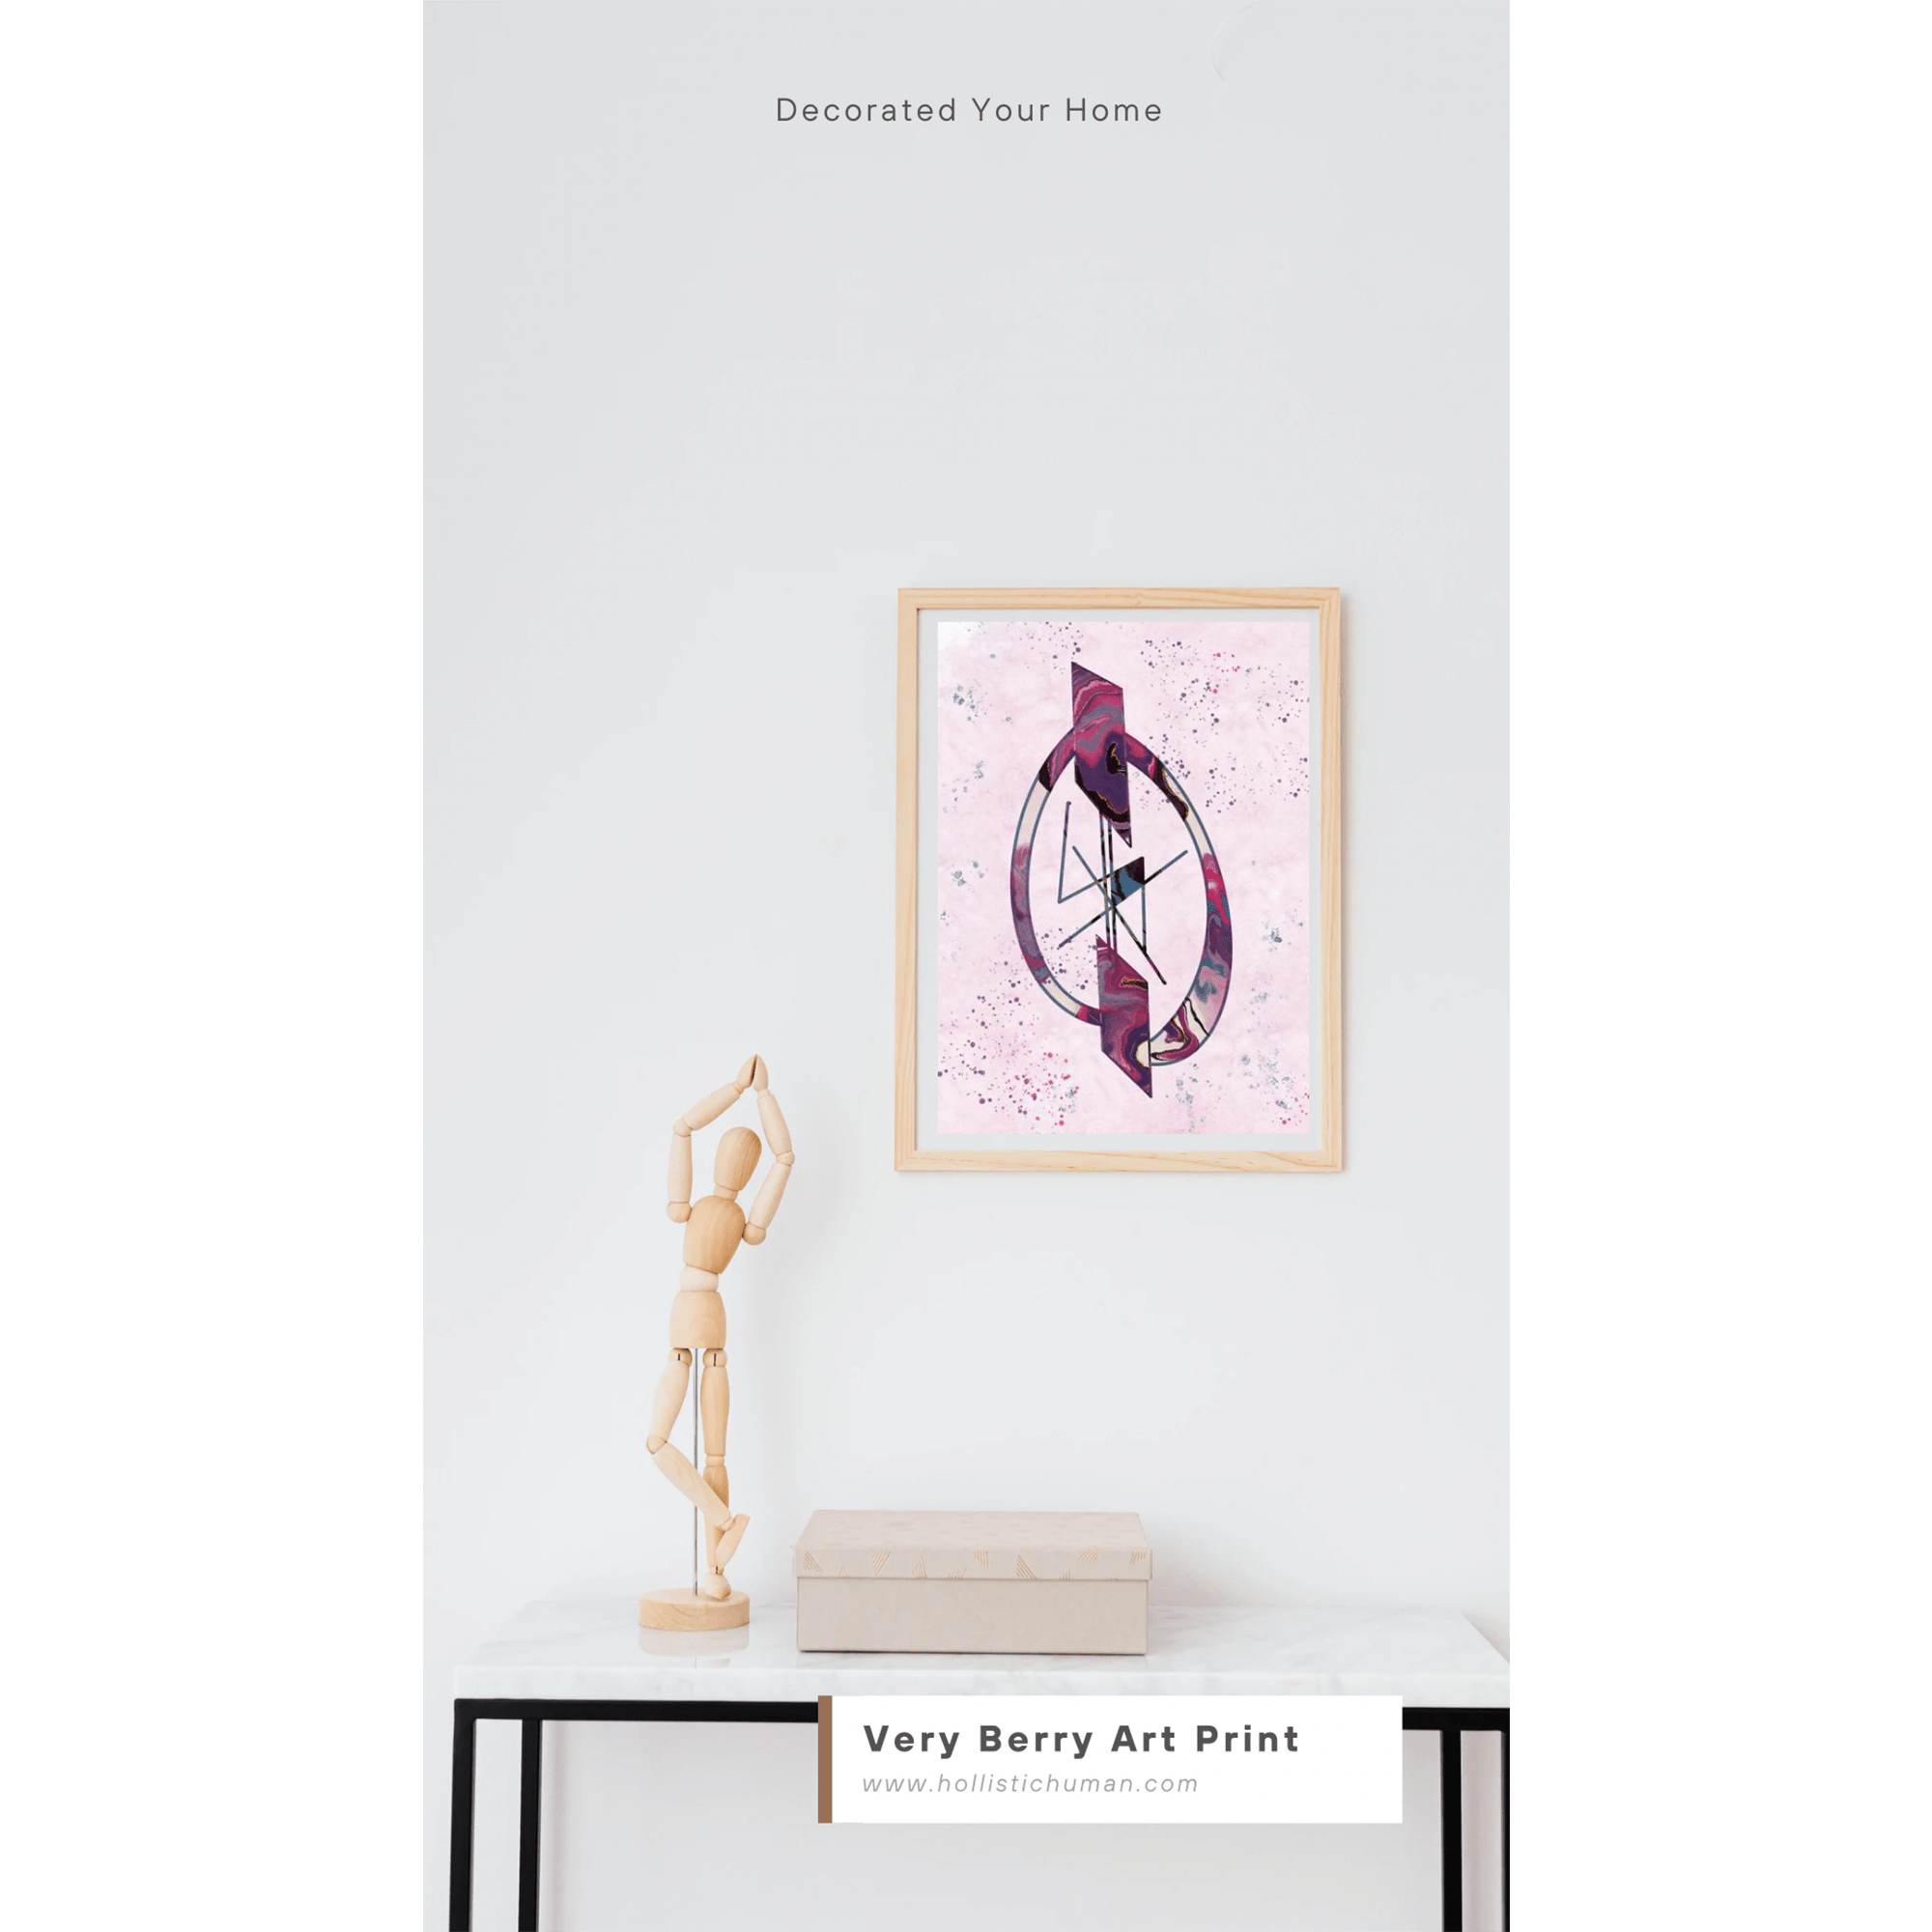 Very Berry Digital Download Art Print - Hollistic Human Shop